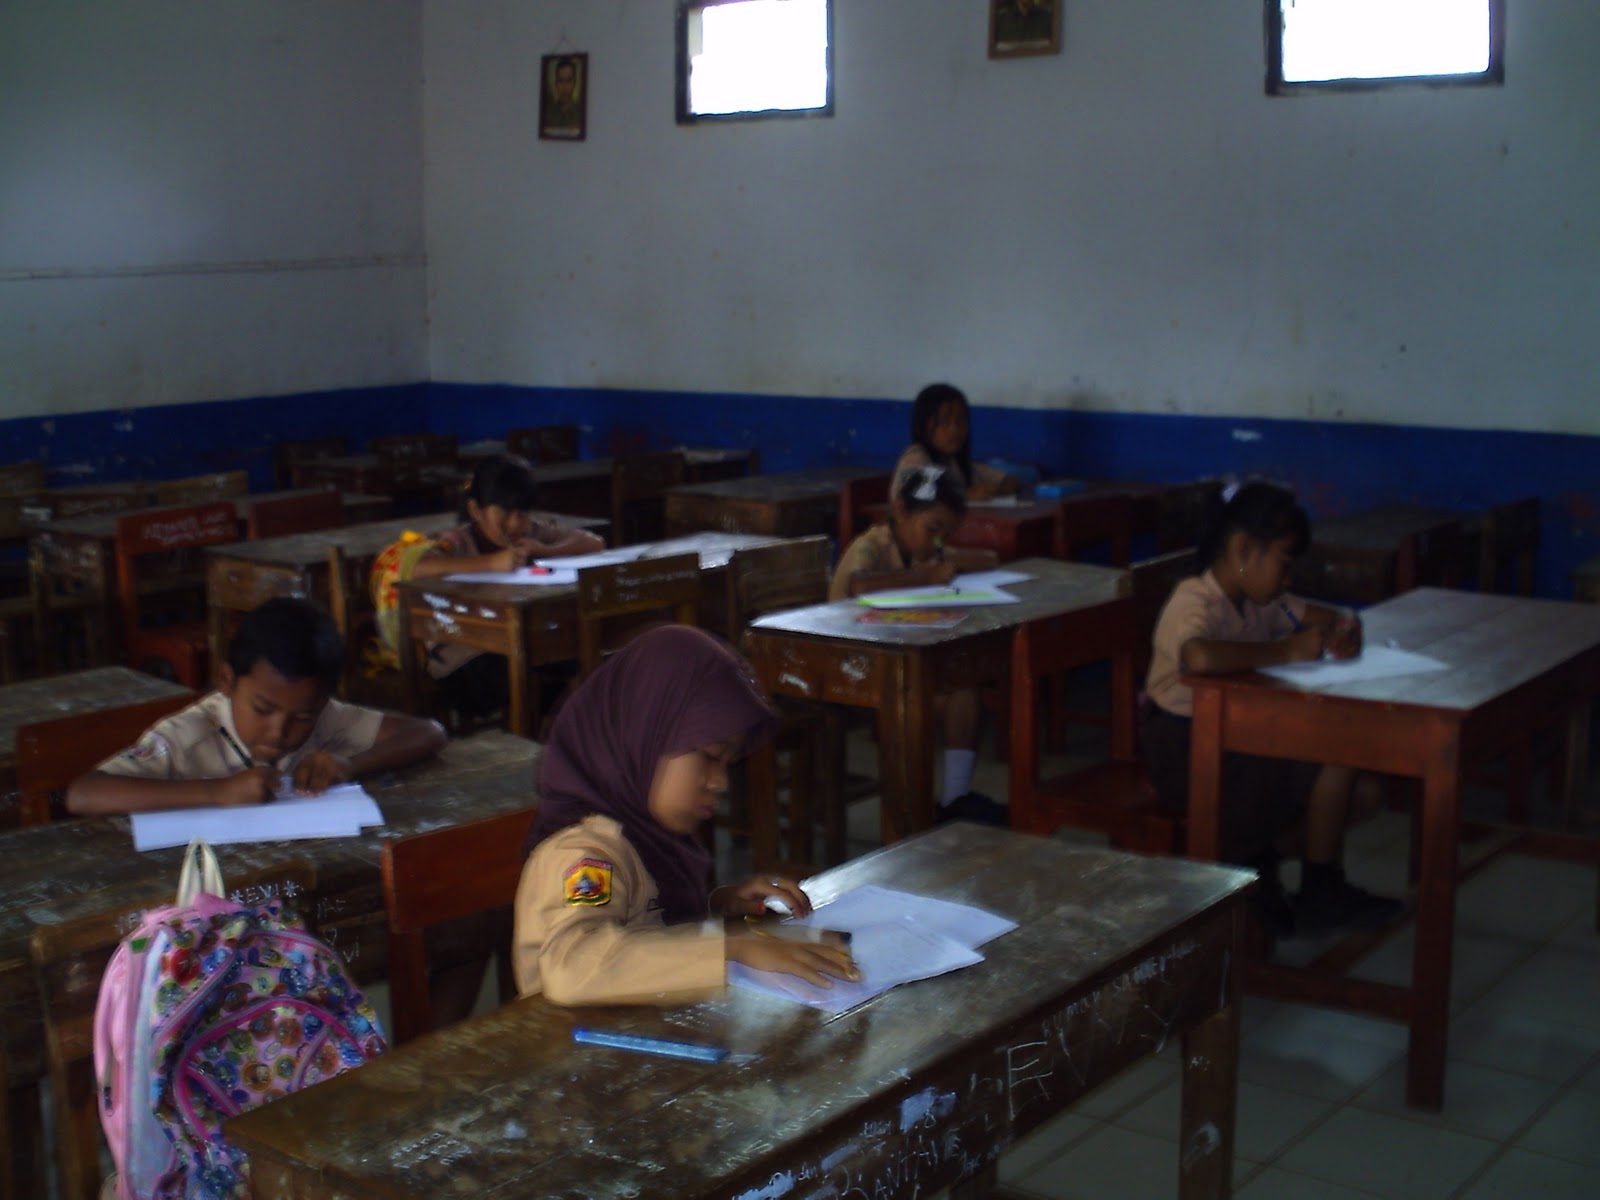 Lomba Membaca menulis dan berhitung CALISTUNG Untuk kelas 1 2 dan 3 telah selesai dilaksanakan di tingkat gugus 4 kecamatan Pabuaran dengan lancar